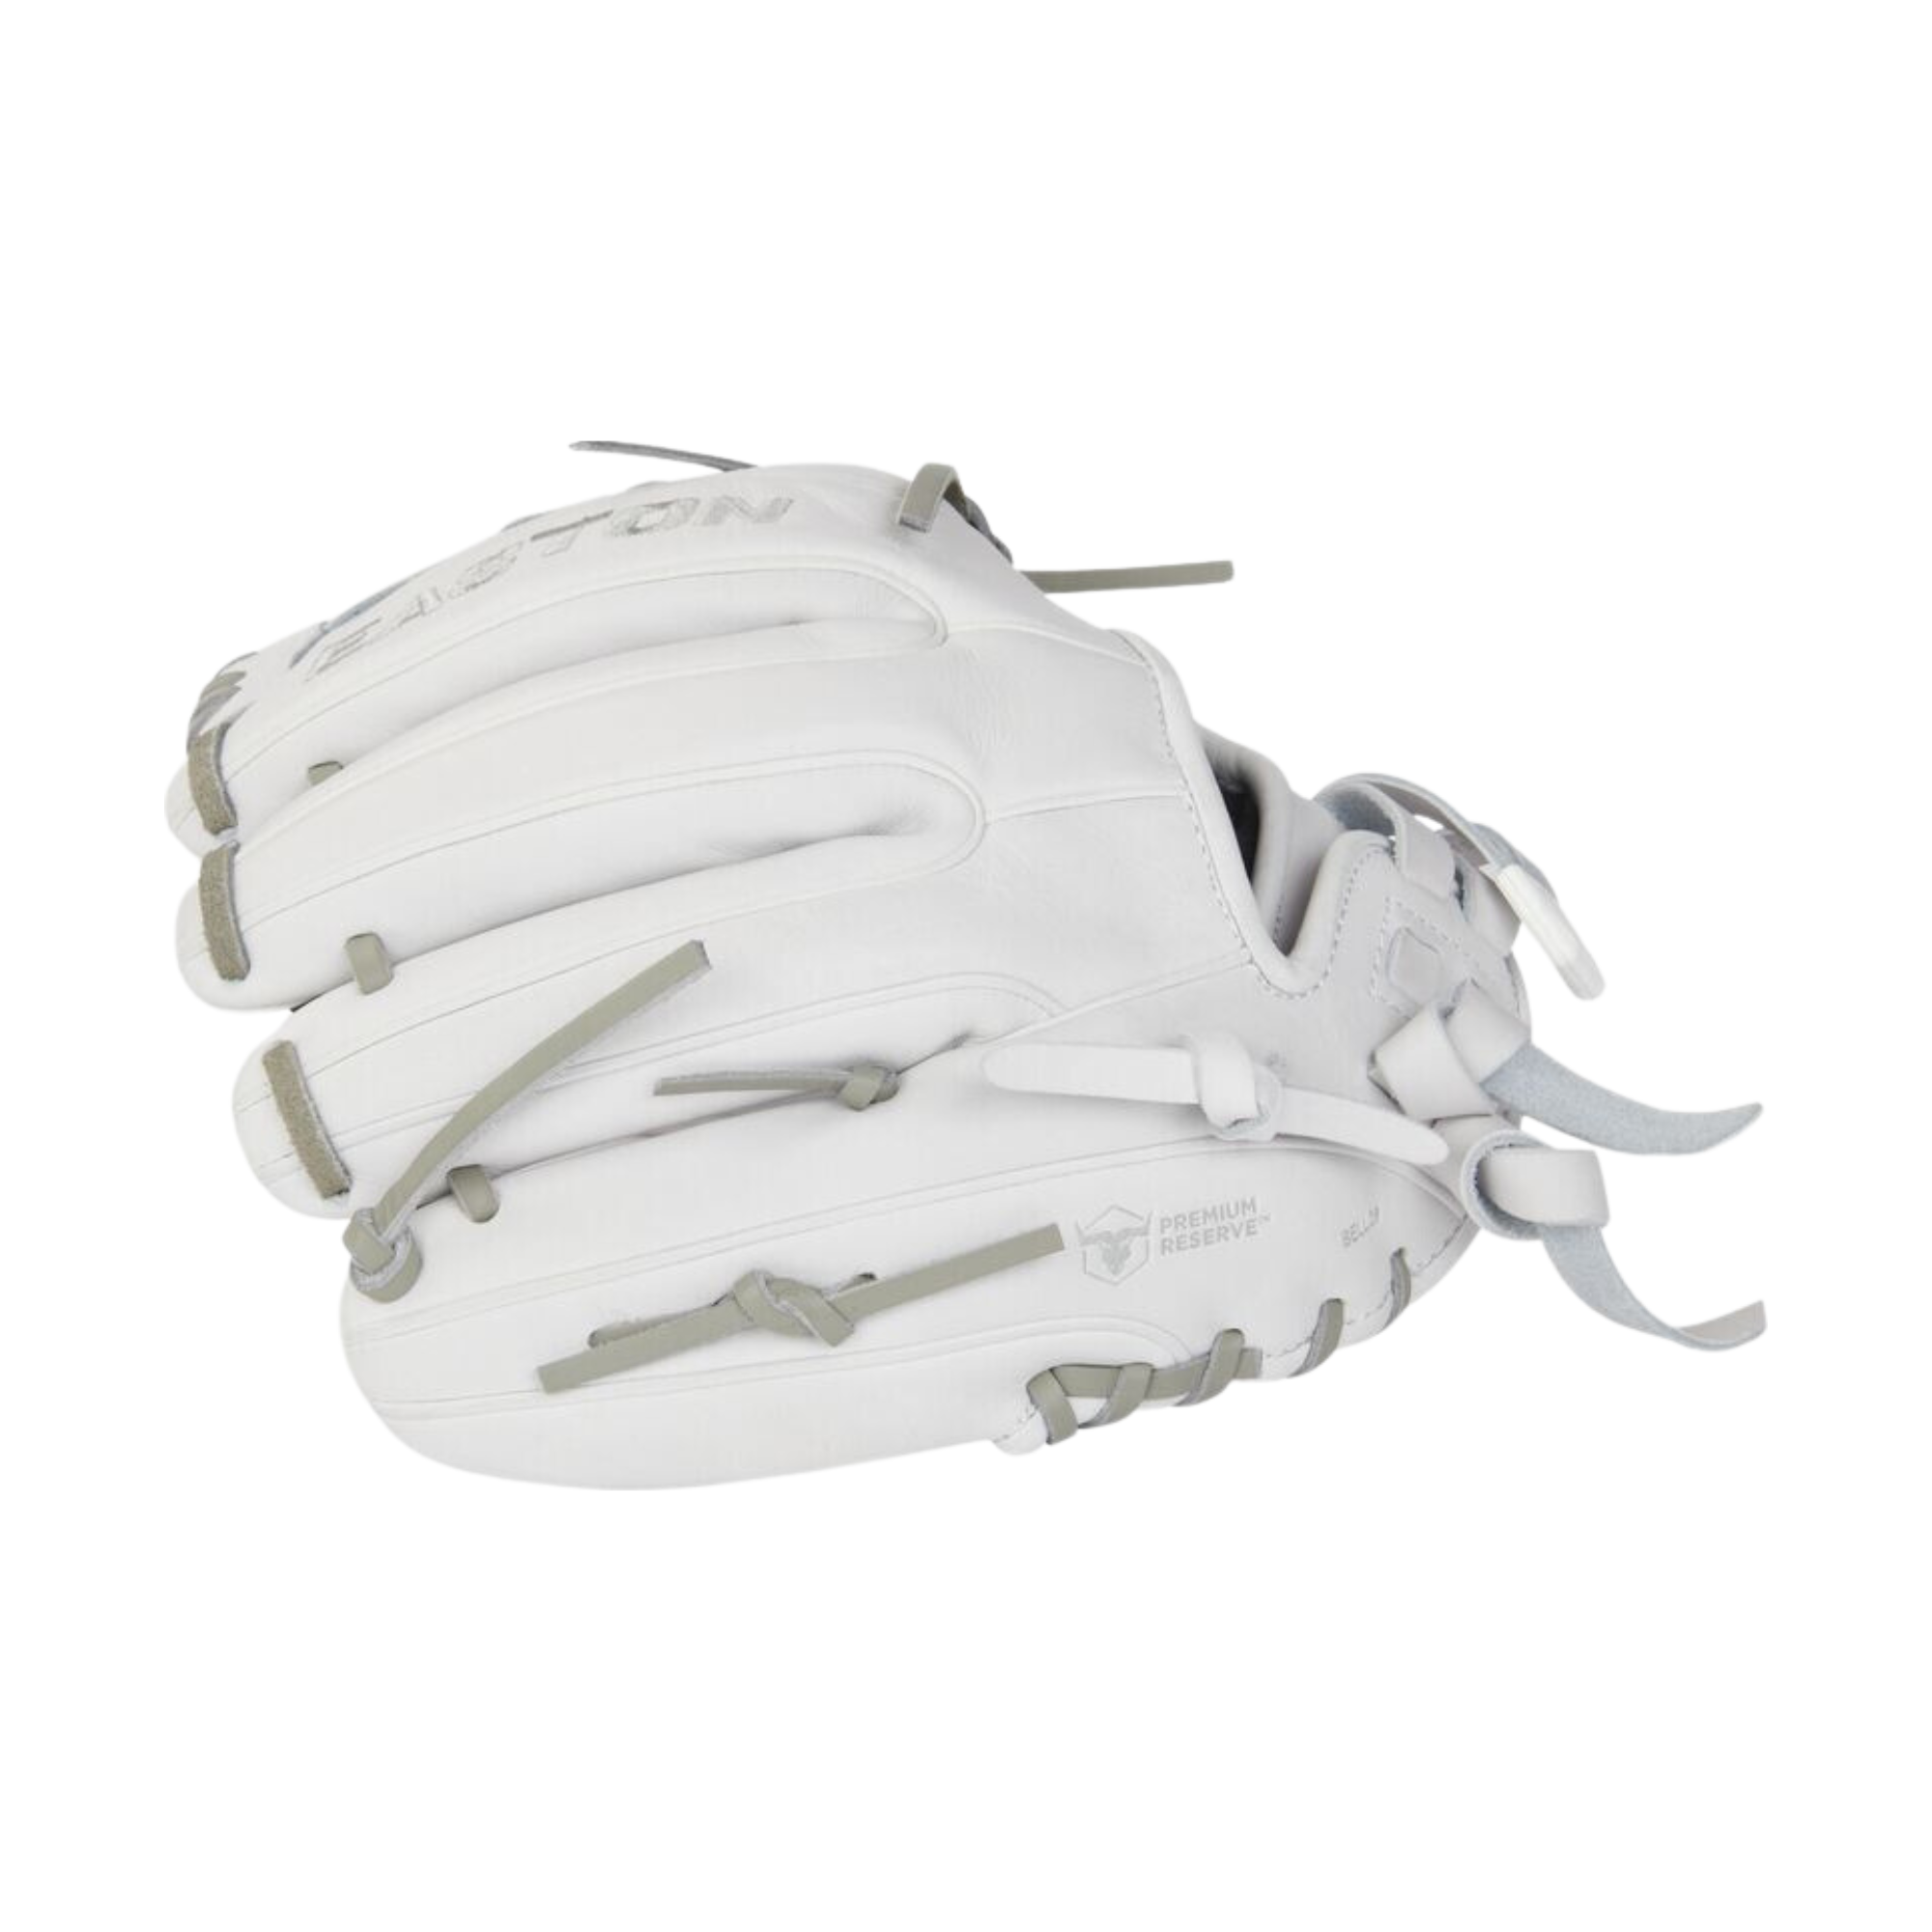 Easton Pro Collection Series Softball Glove 11.75" RHT